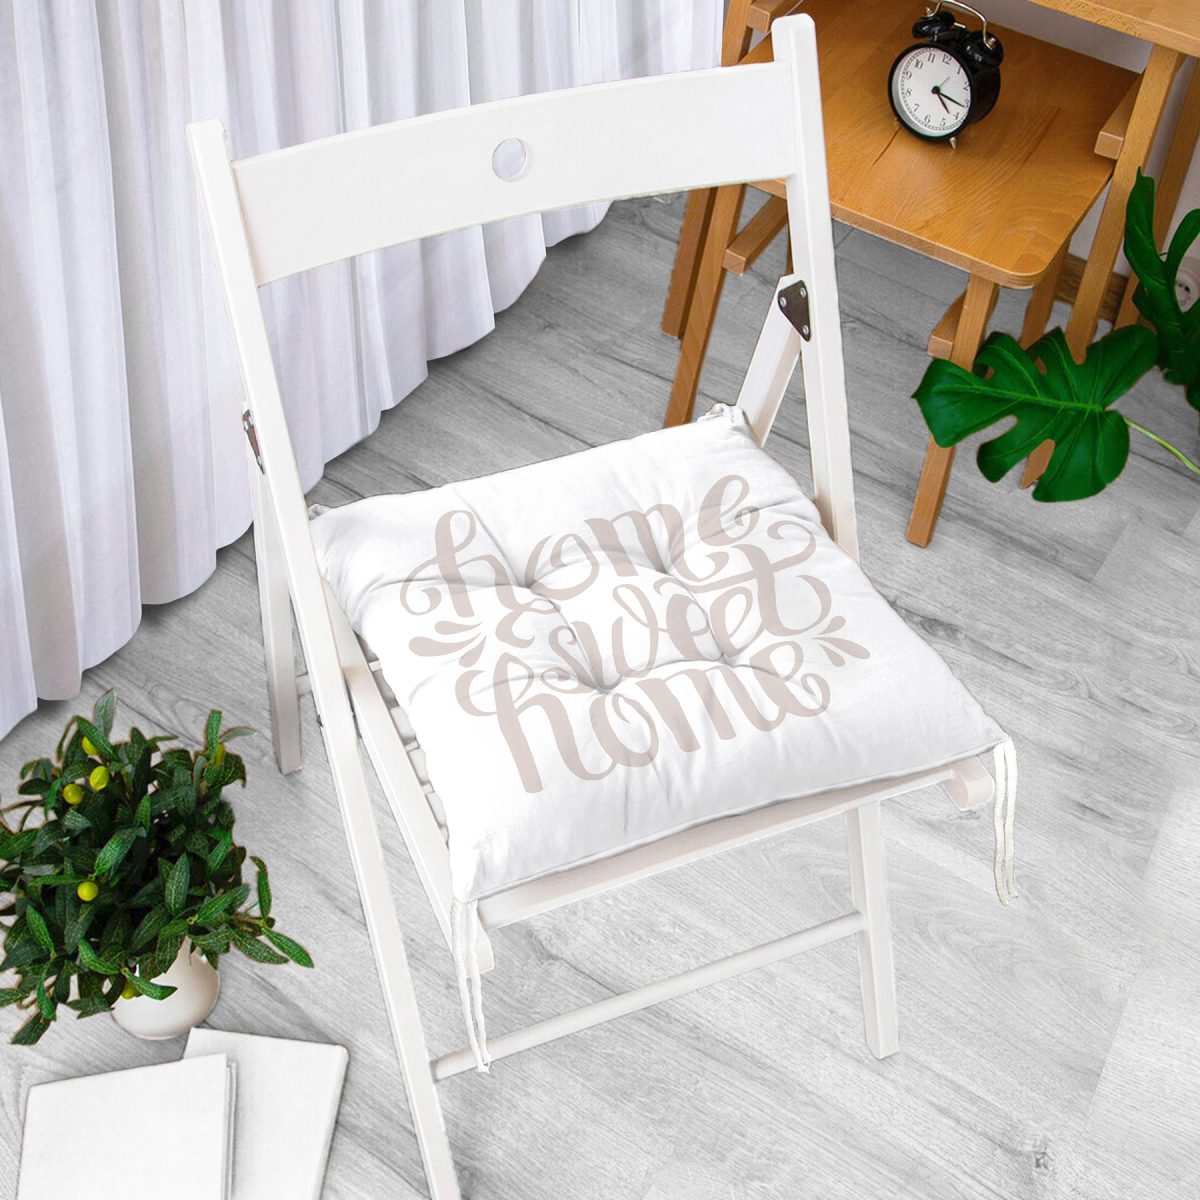 RealHomes Dijital Baskılı Pofuduk Sandalye Minderi 40 x 40 cm Düğmeli Realhomes